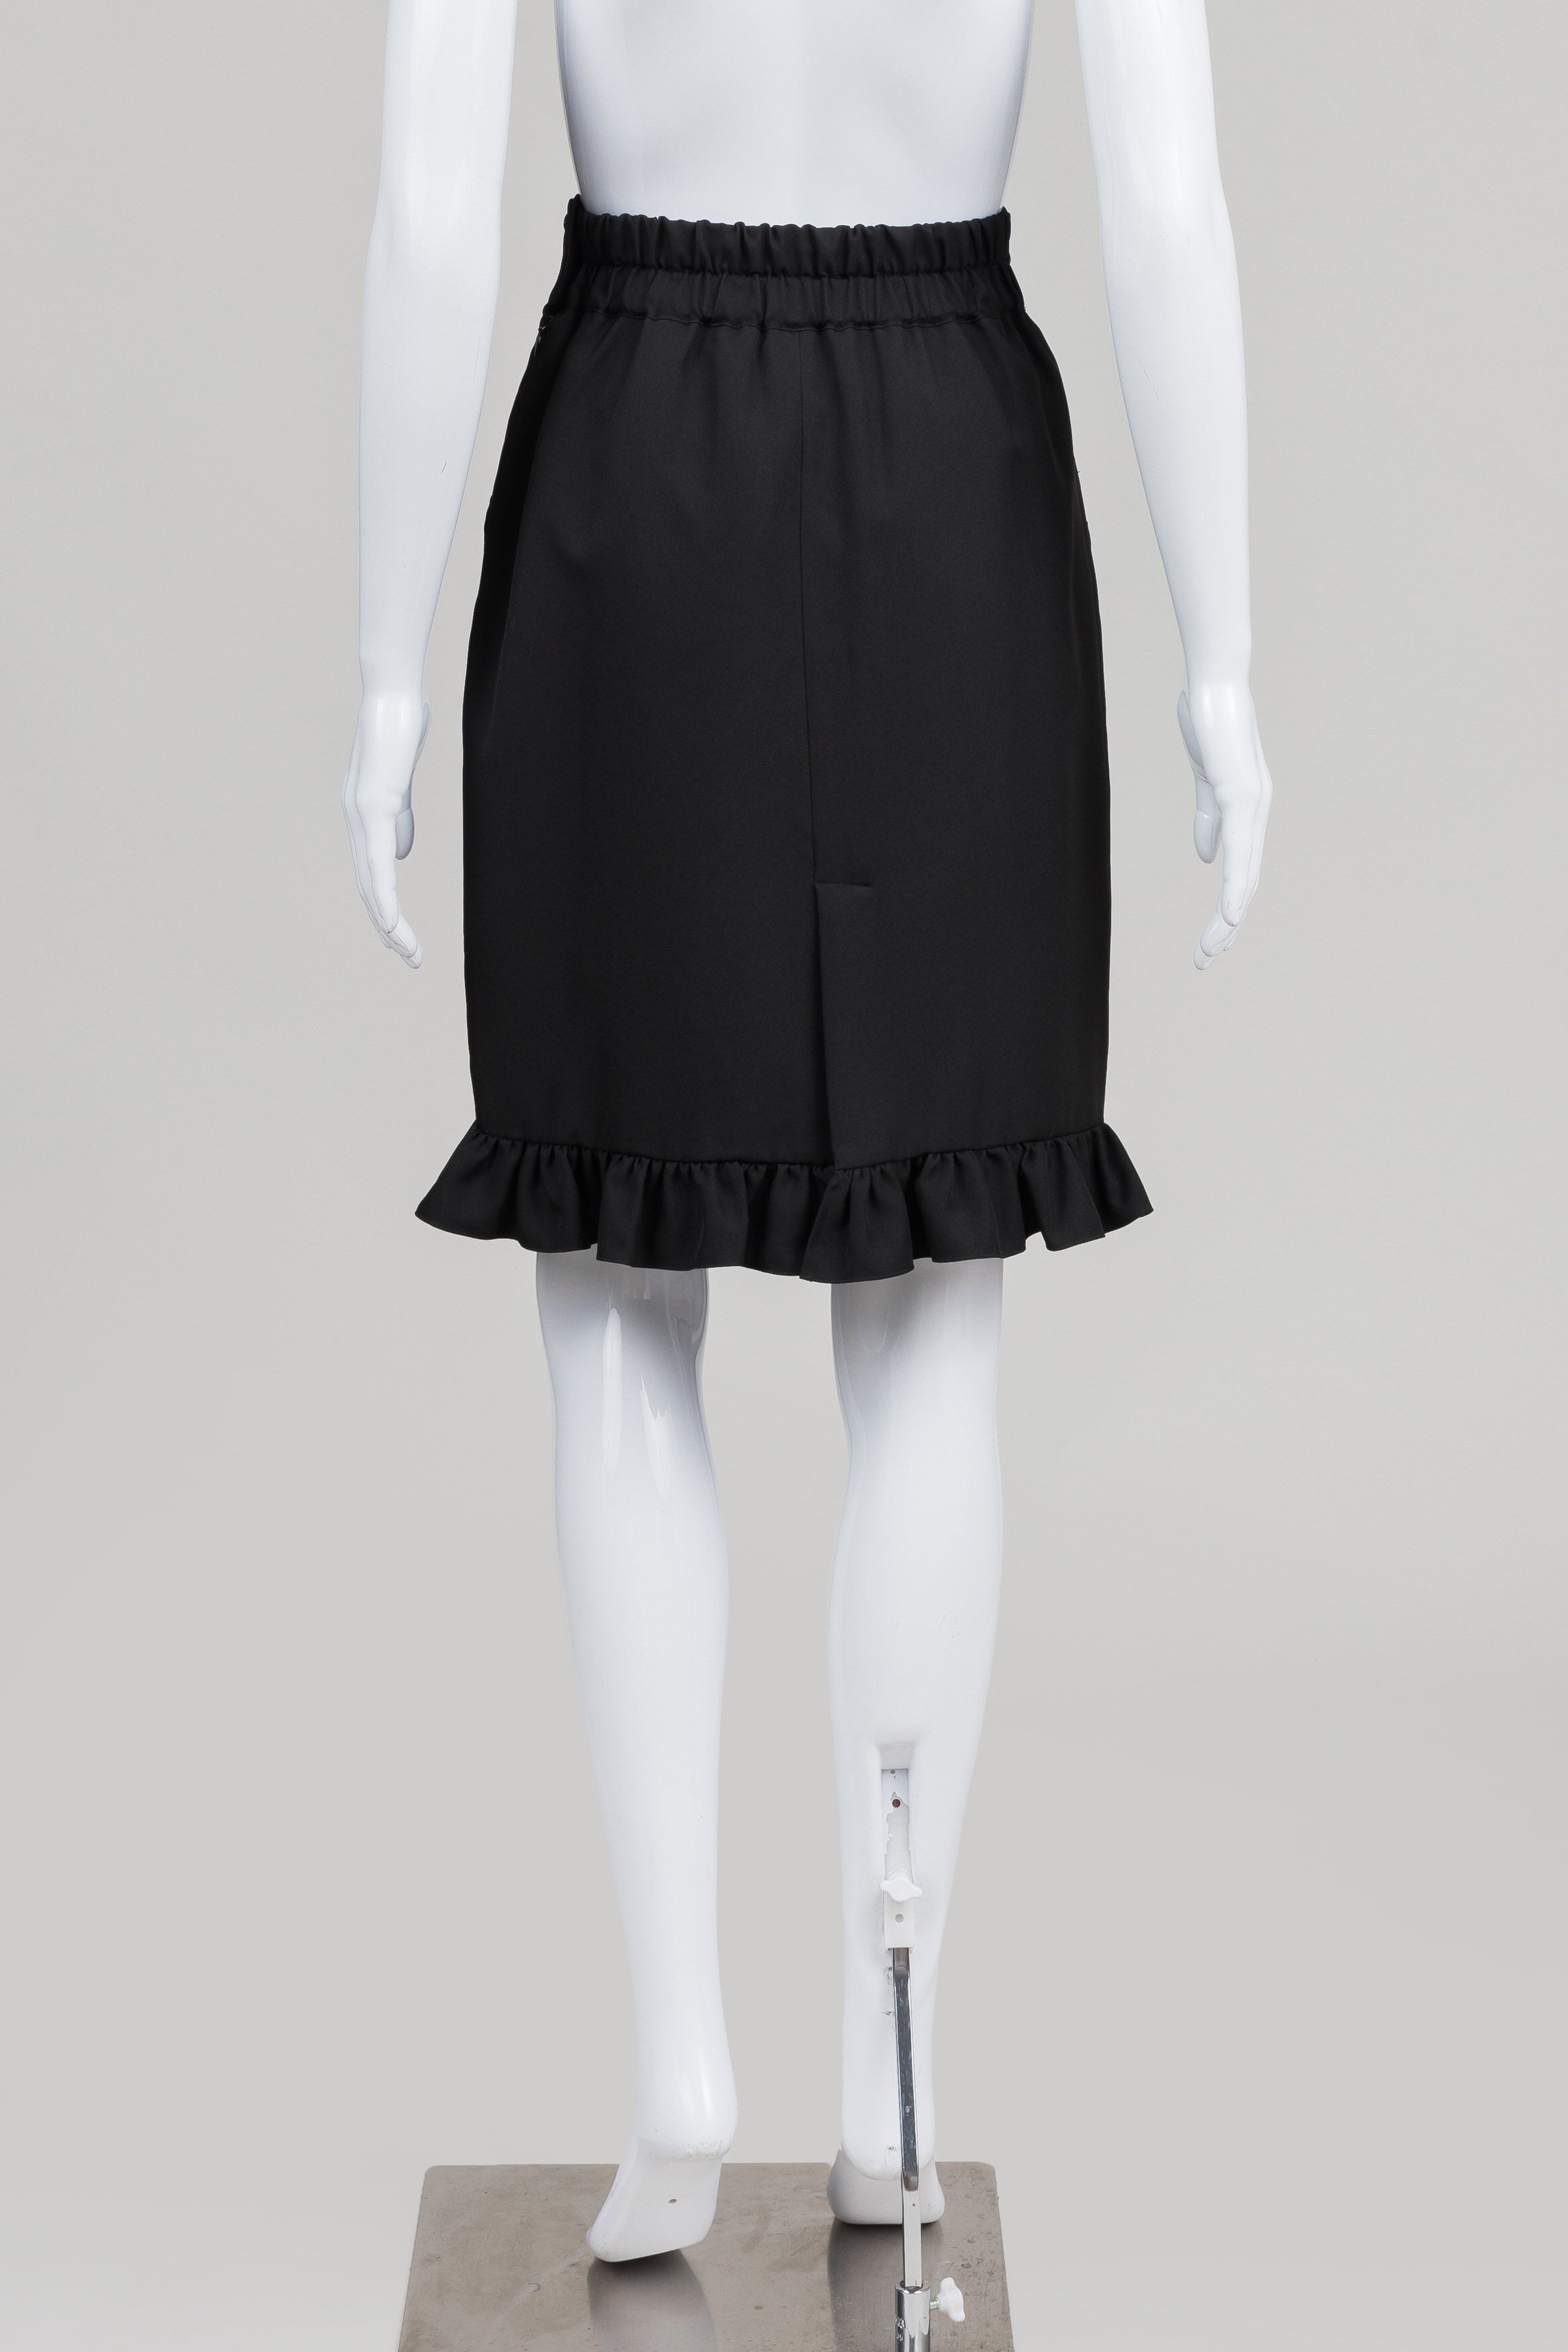 Milk Black Pencil Skirt w/ Ruffle & Applique Pockets